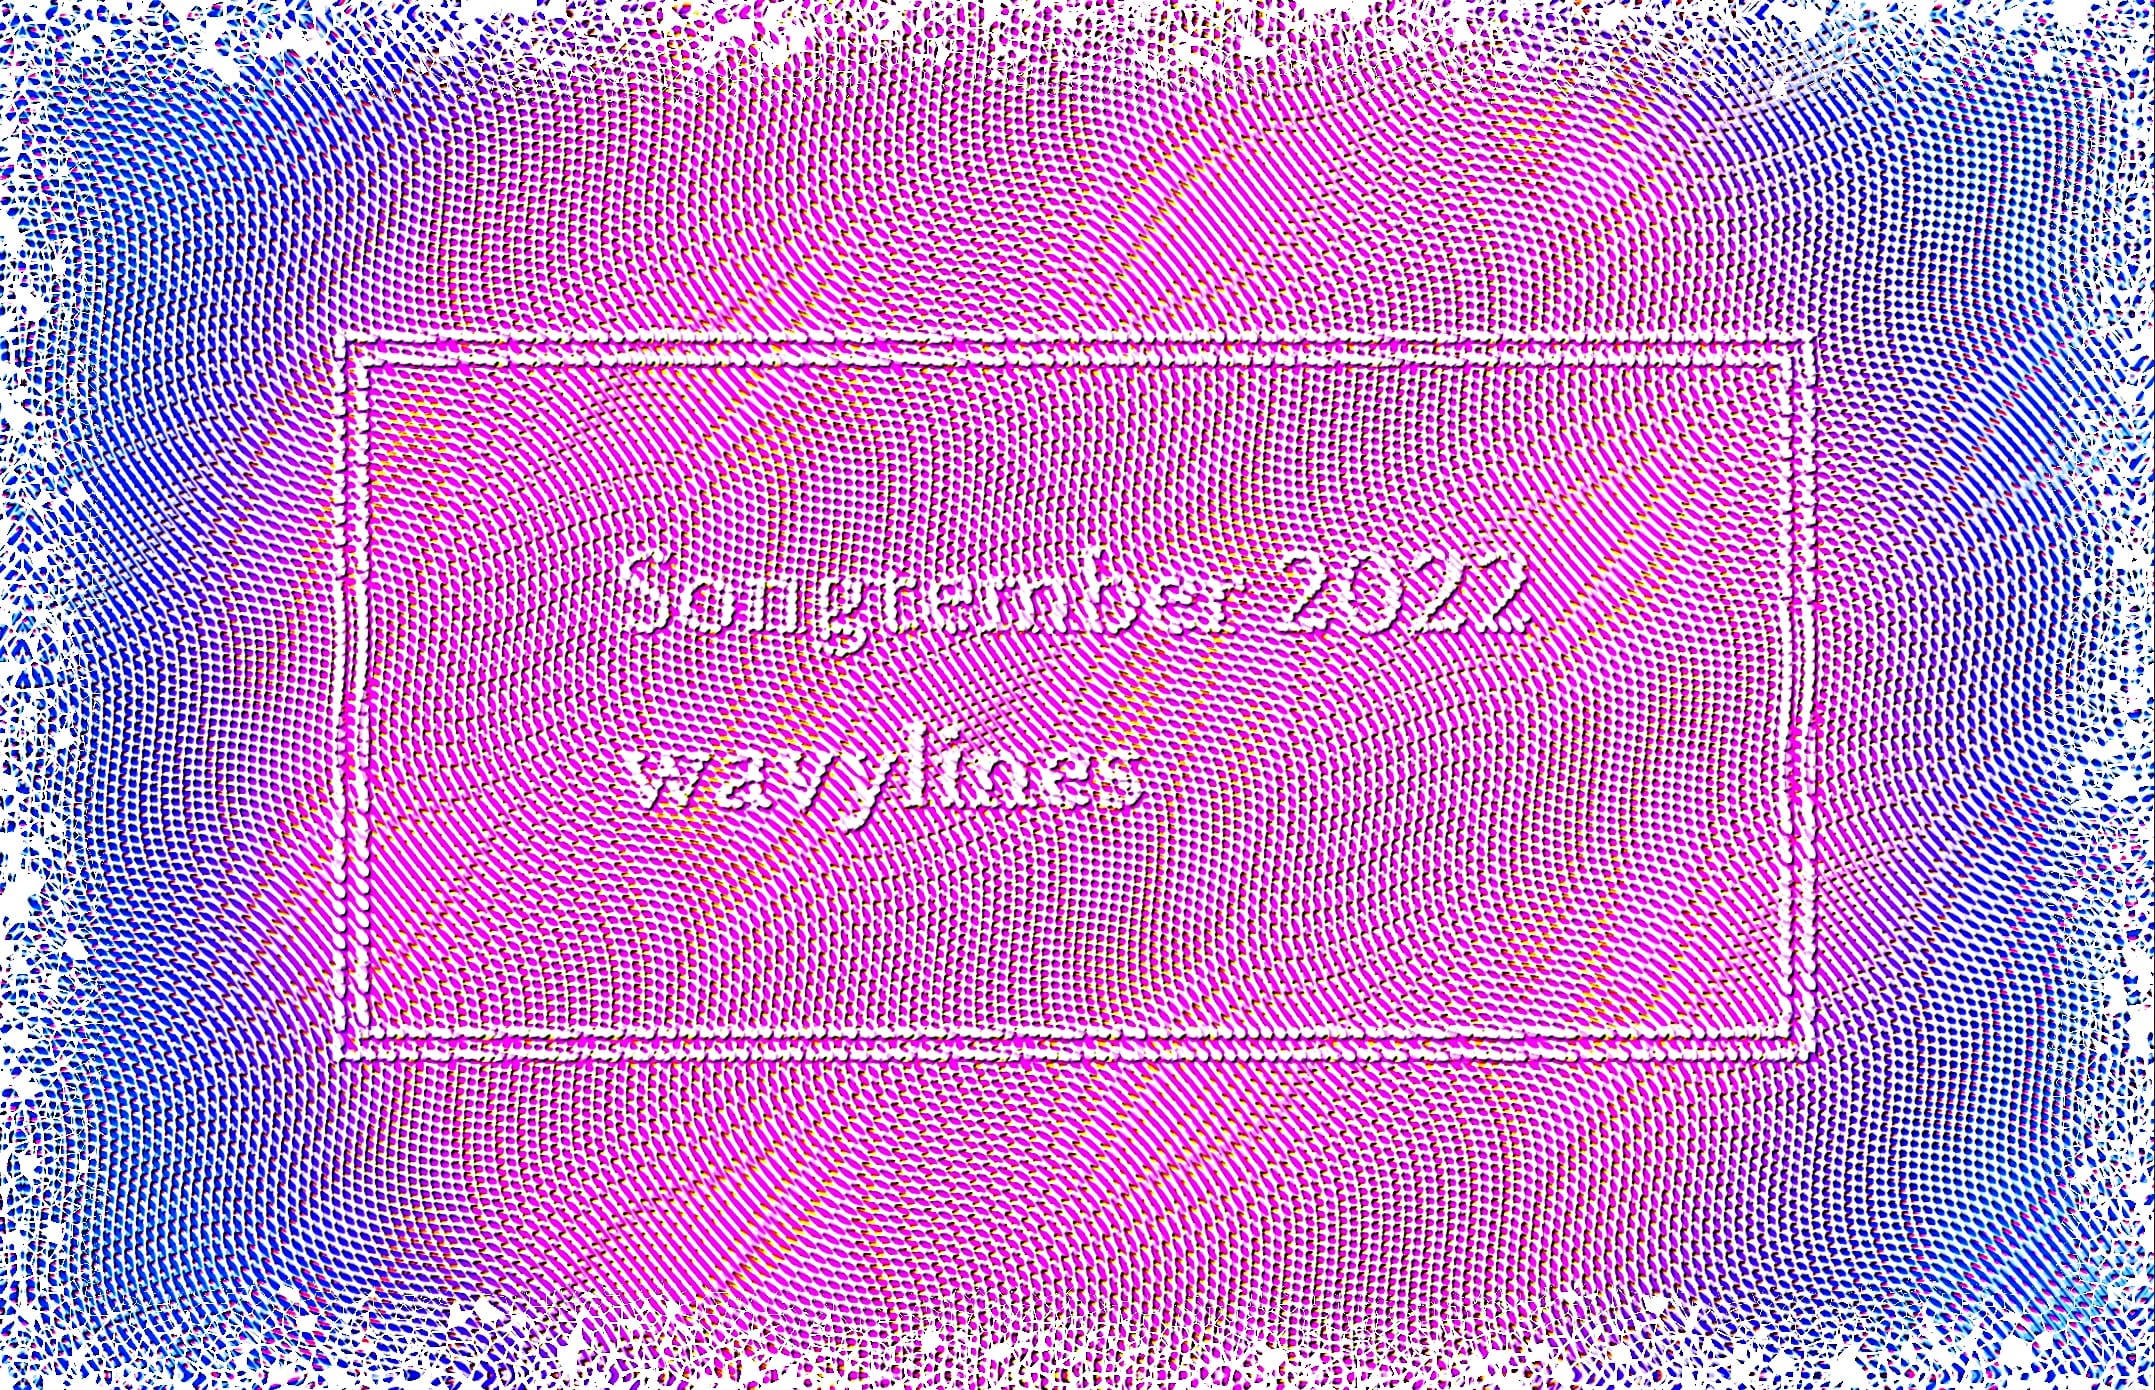 Songtember 2022